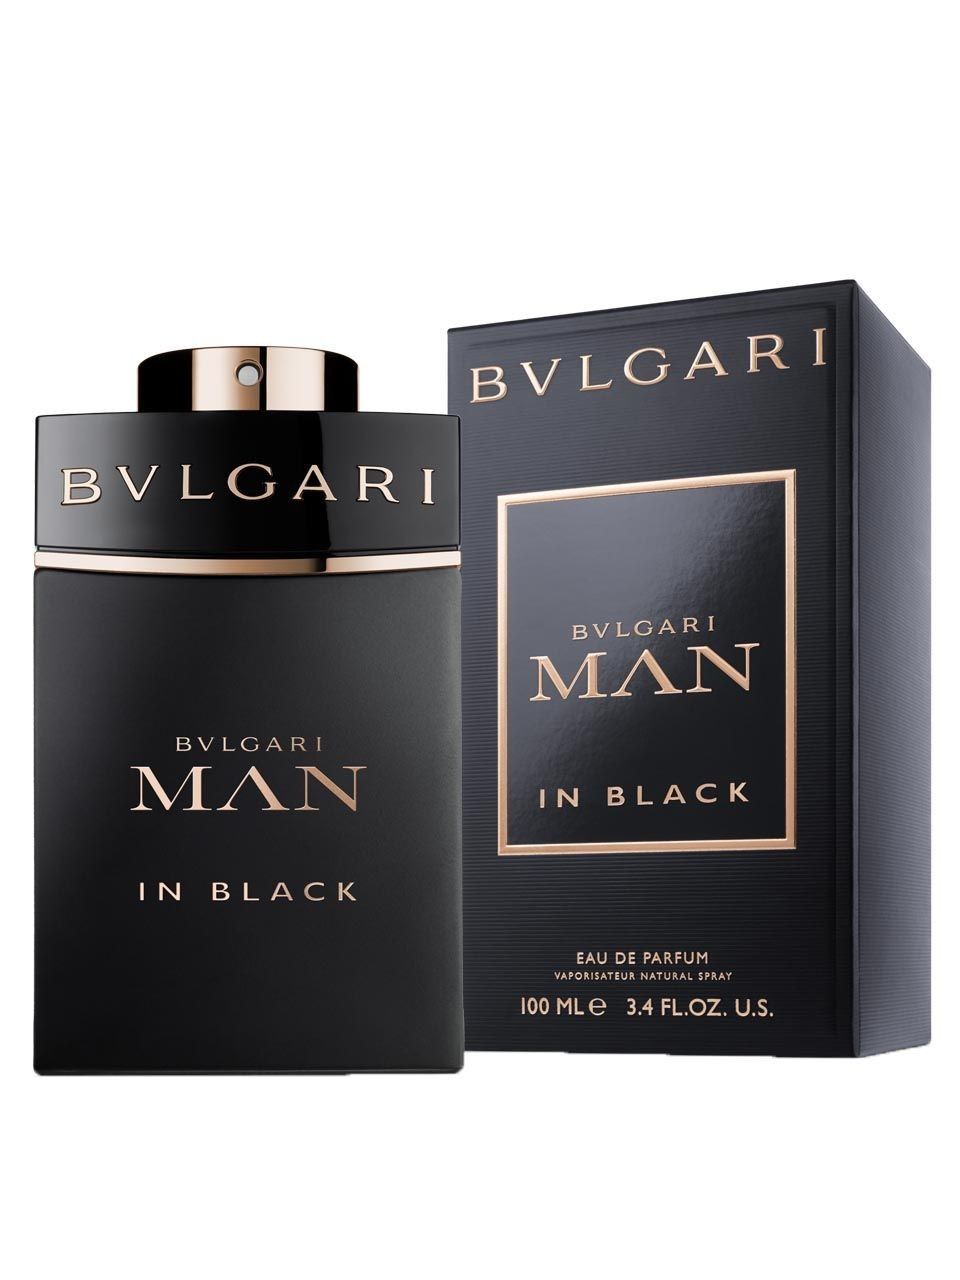 Bvlgari Man In Black Eau de Parfum 100ml.